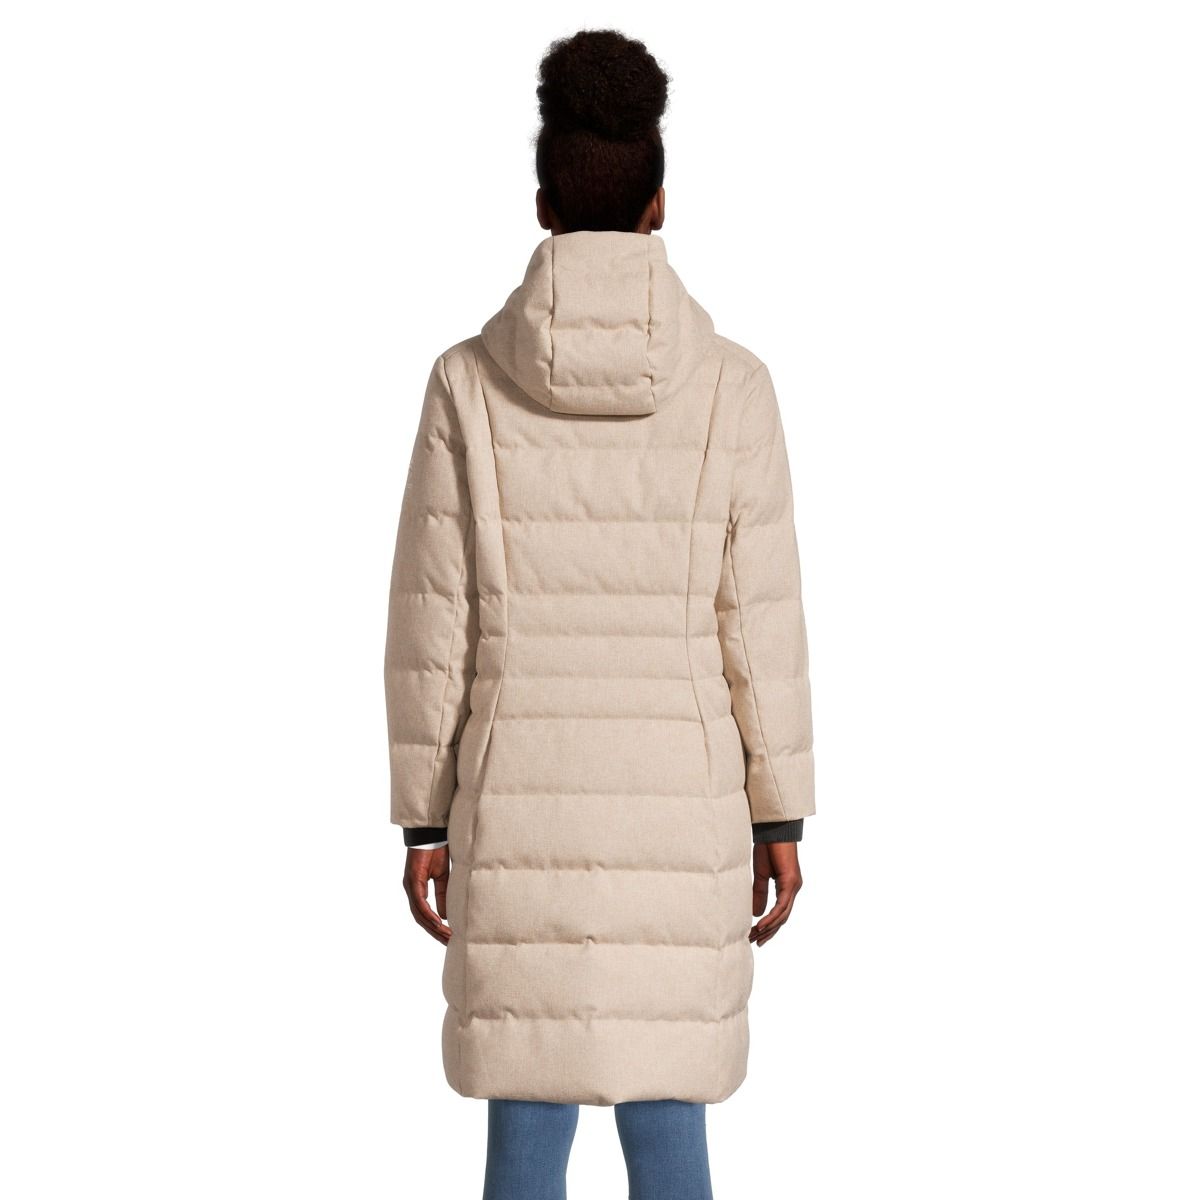 Woods Women's Lipsett Baffled Winter Jacket, Long, Insulated Down